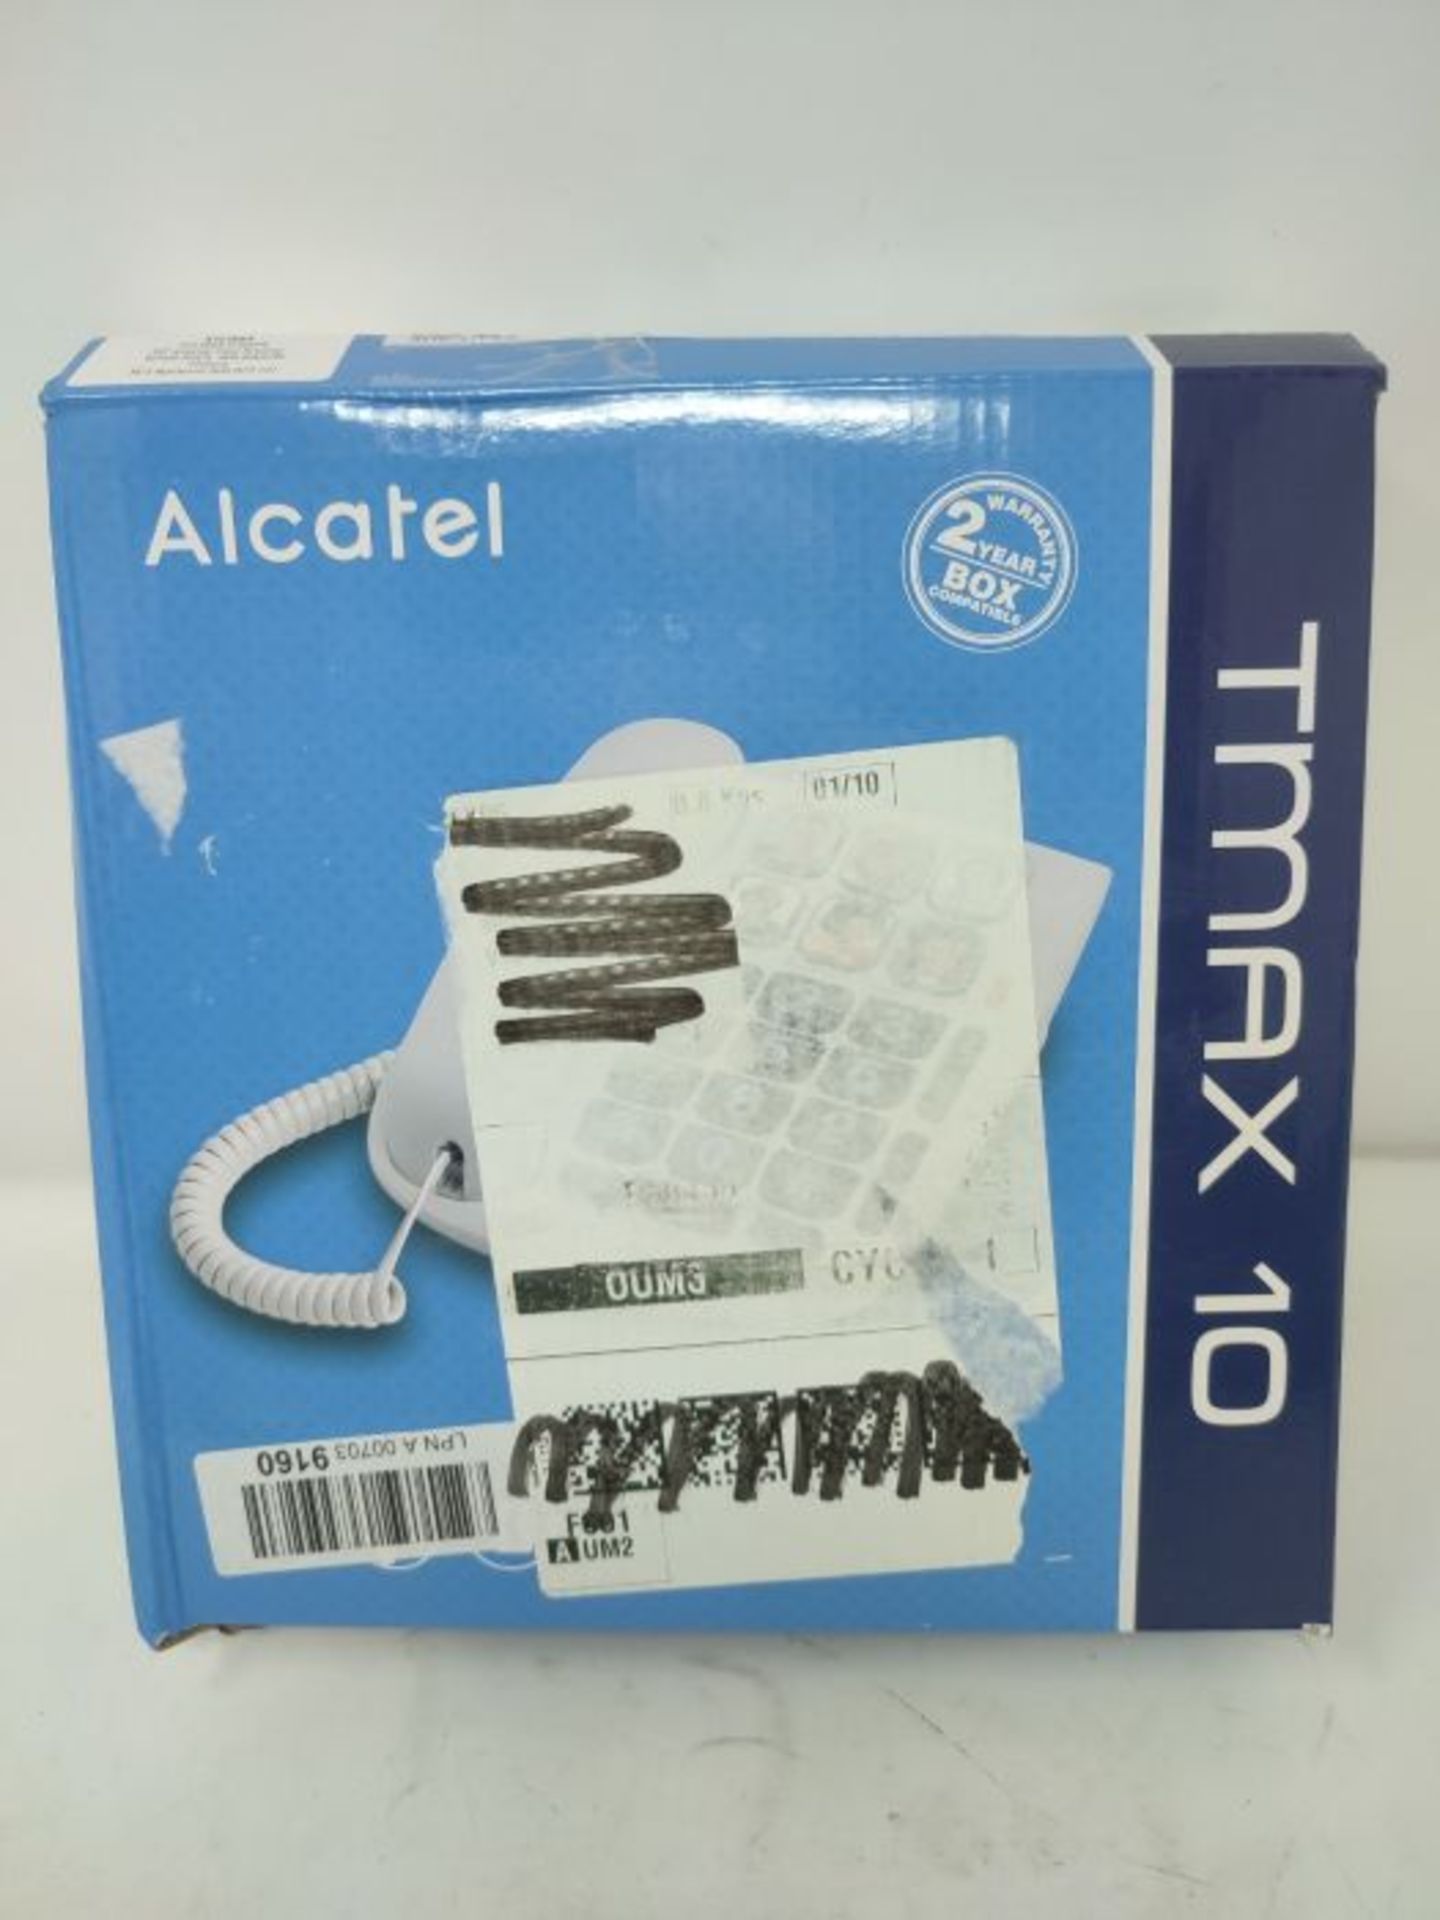 Alcatel Max 10 Corded Phone for Seniors White. - Image 2 of 6